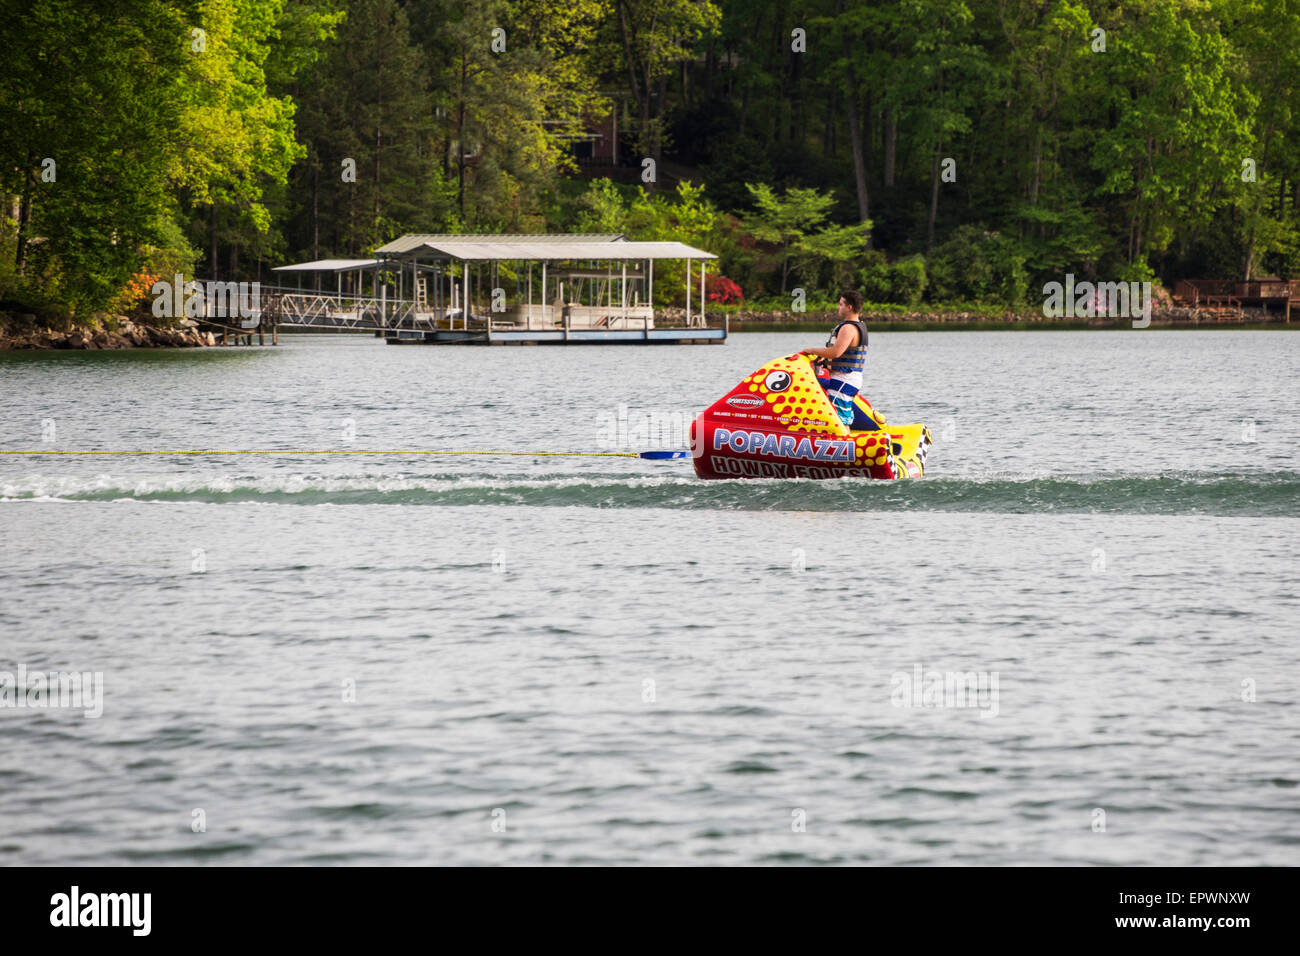 Inflatable water ski, South Cove, Lake Keowee, Seneca, Oconee County, South Carolina, USA. Stock Photo